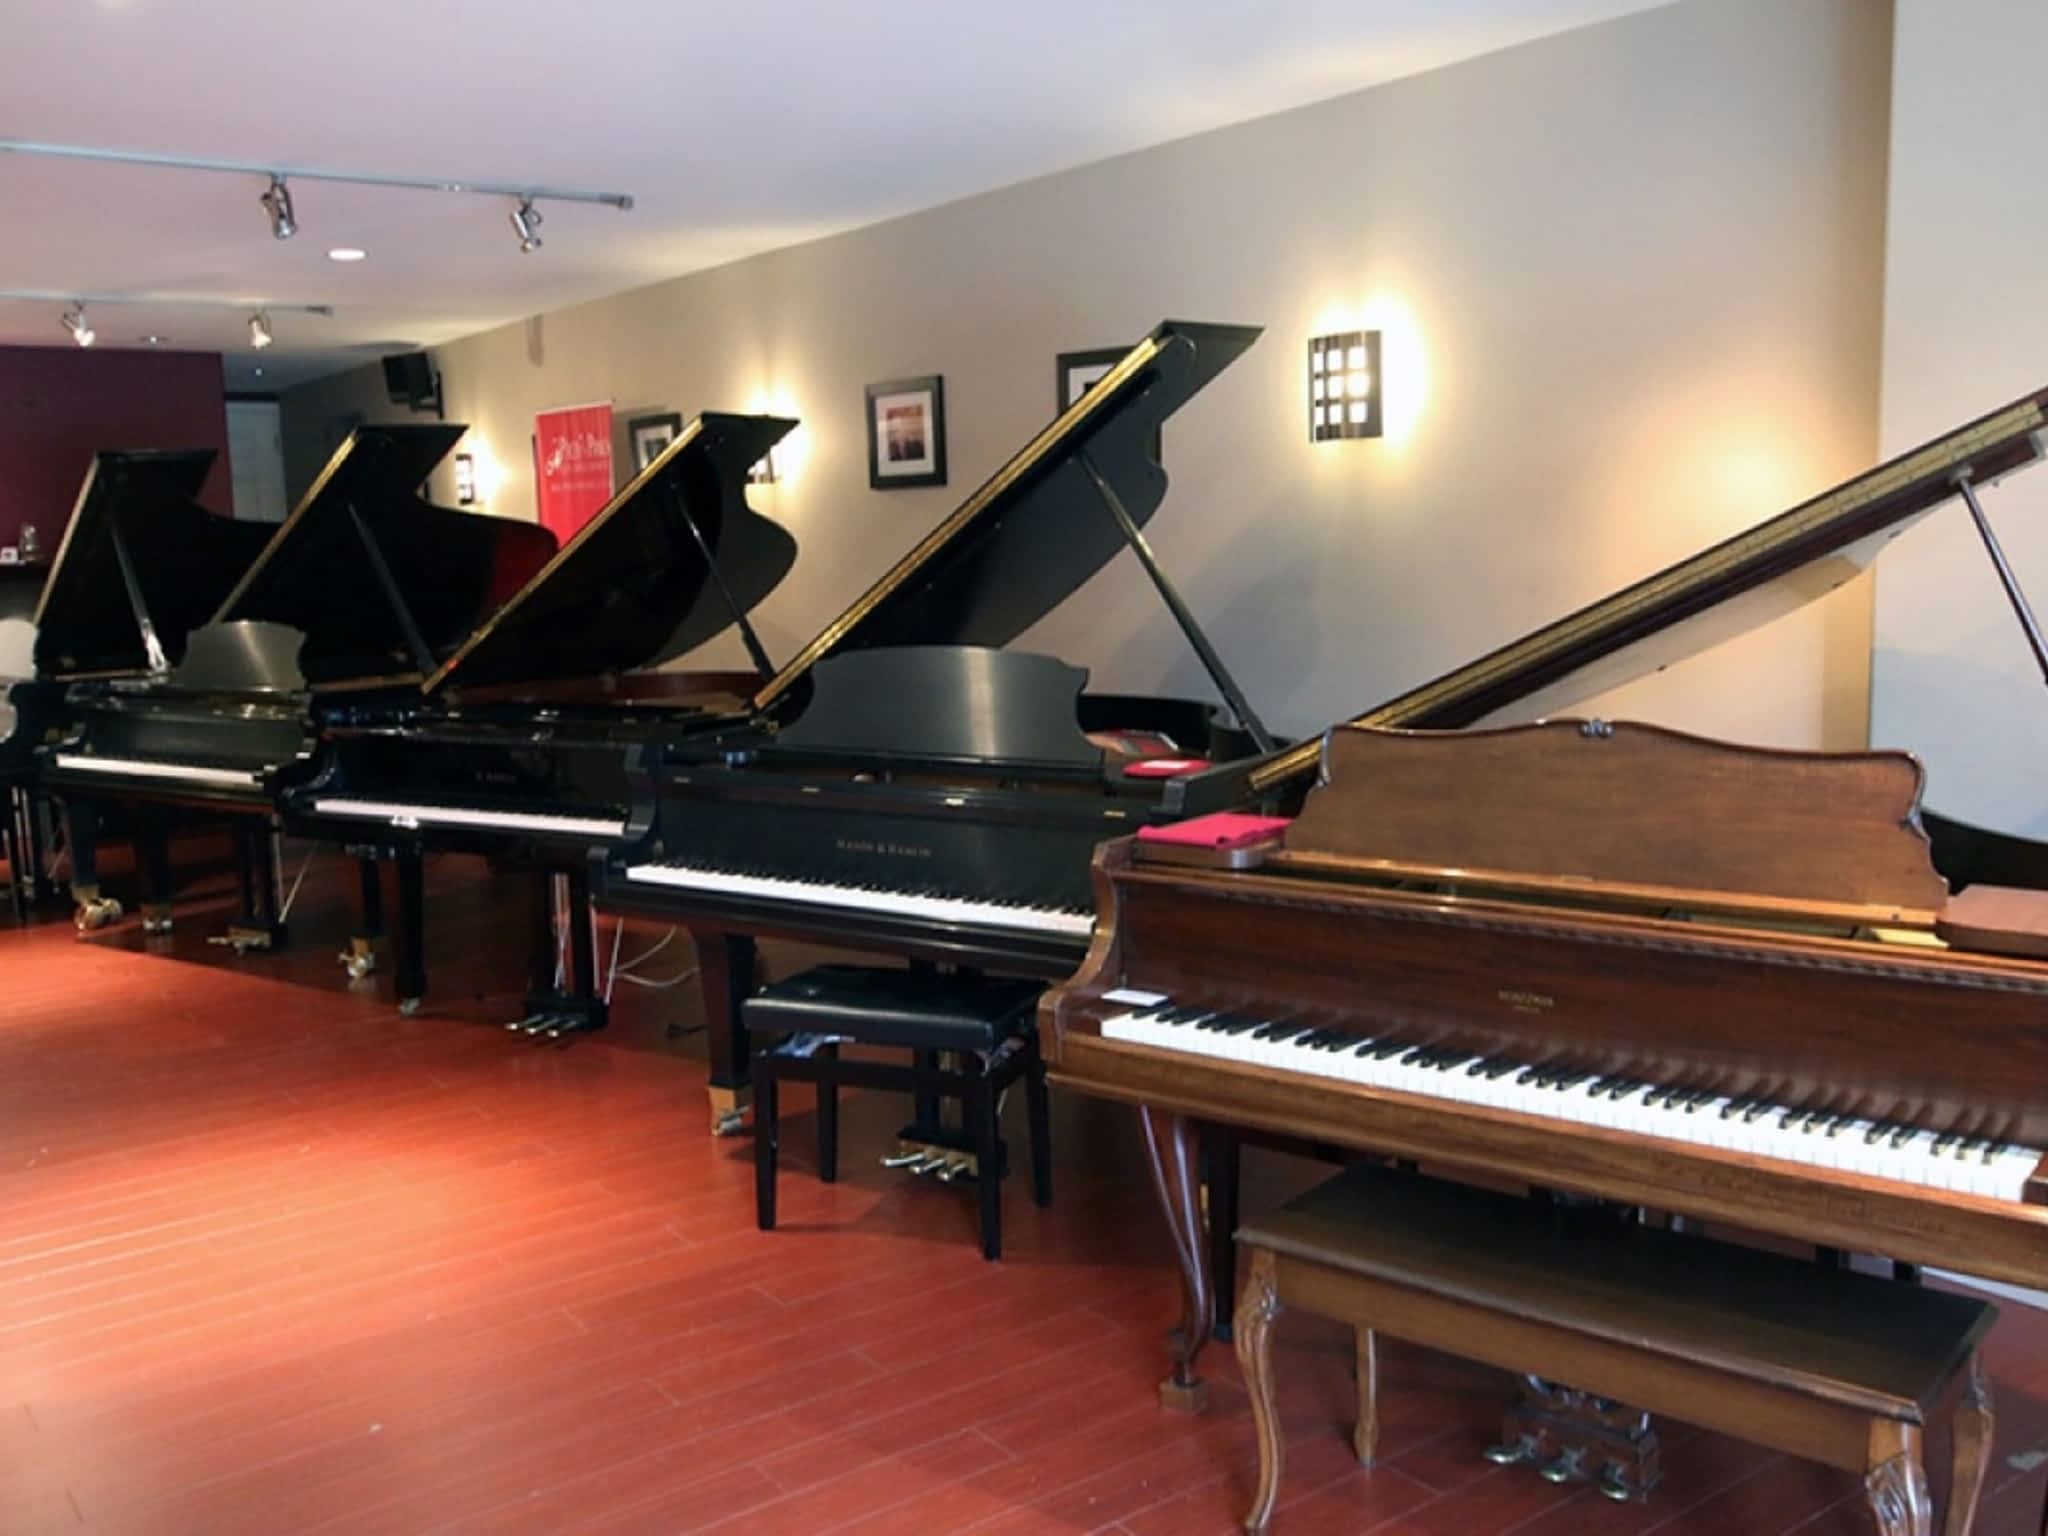 photo Pacey's Pianos Ltd